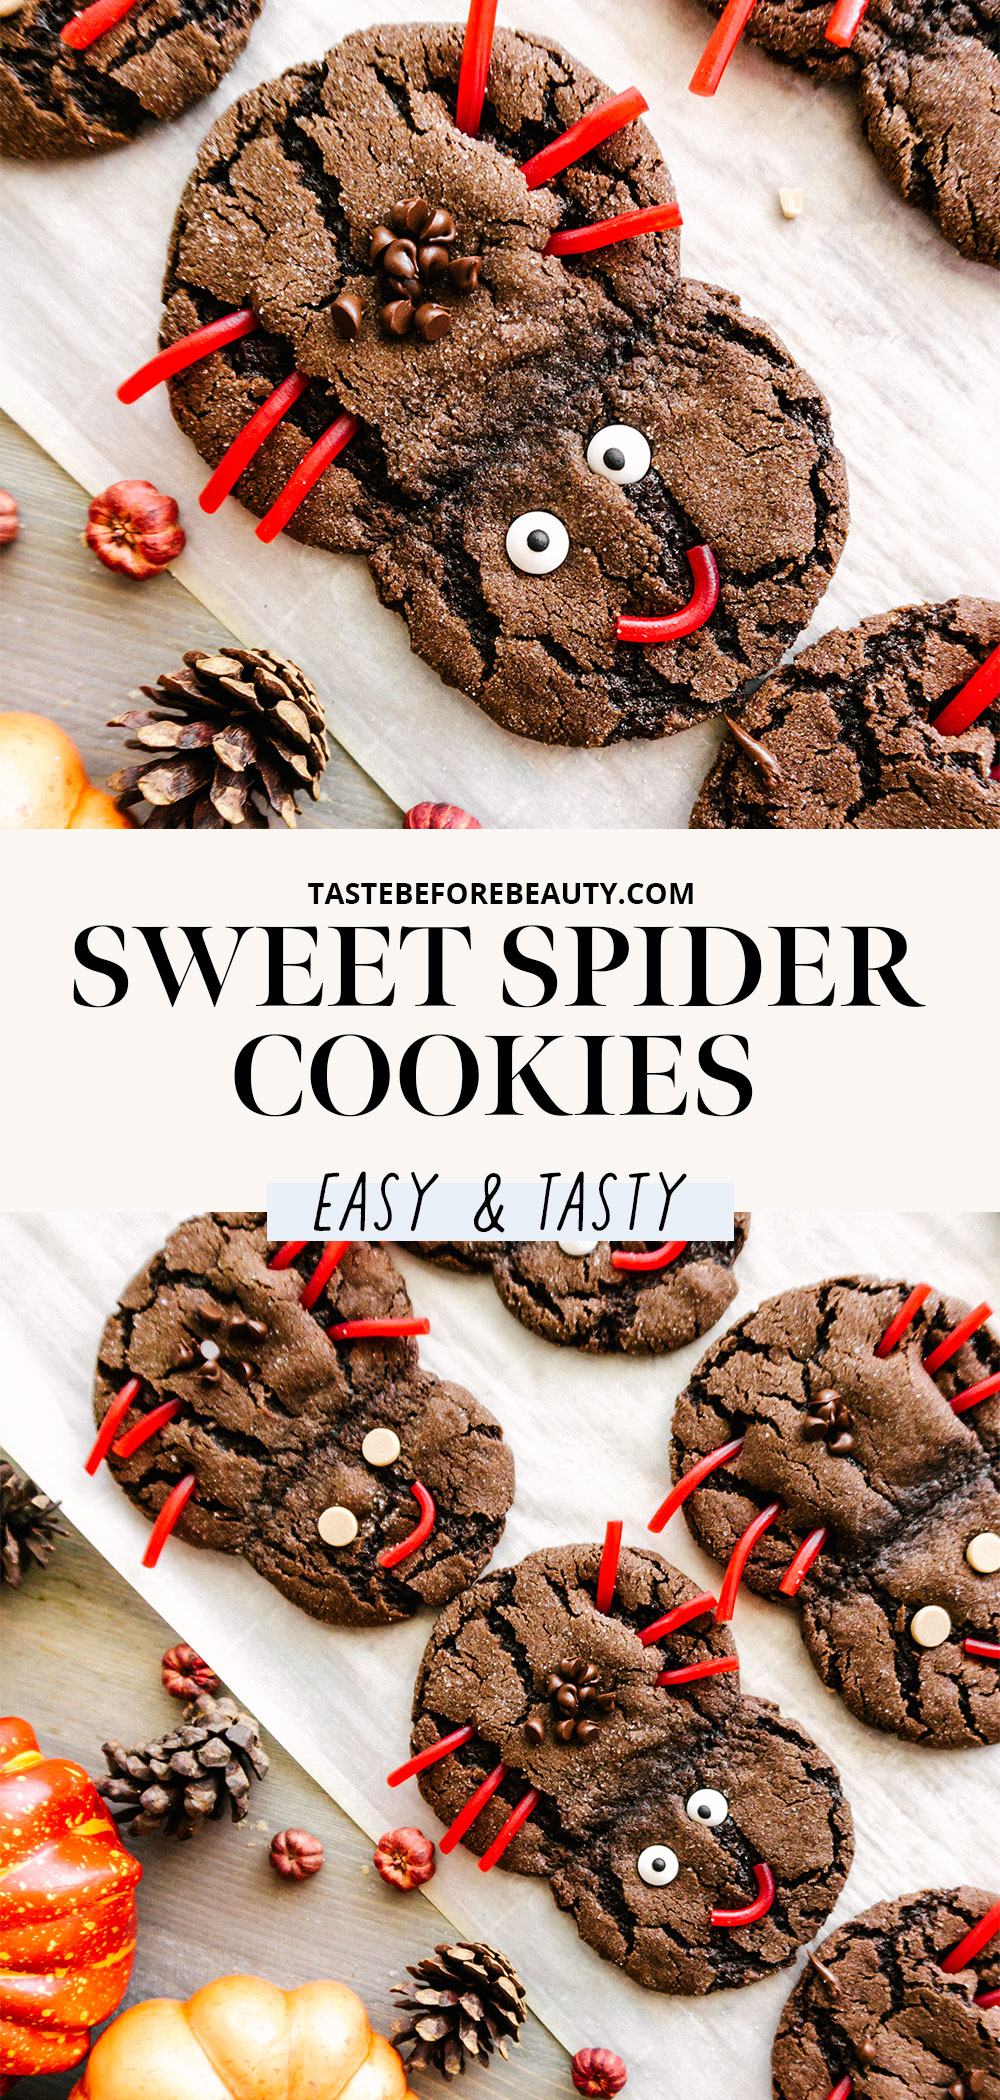 sweet spider cookies chocolate pinterest pin